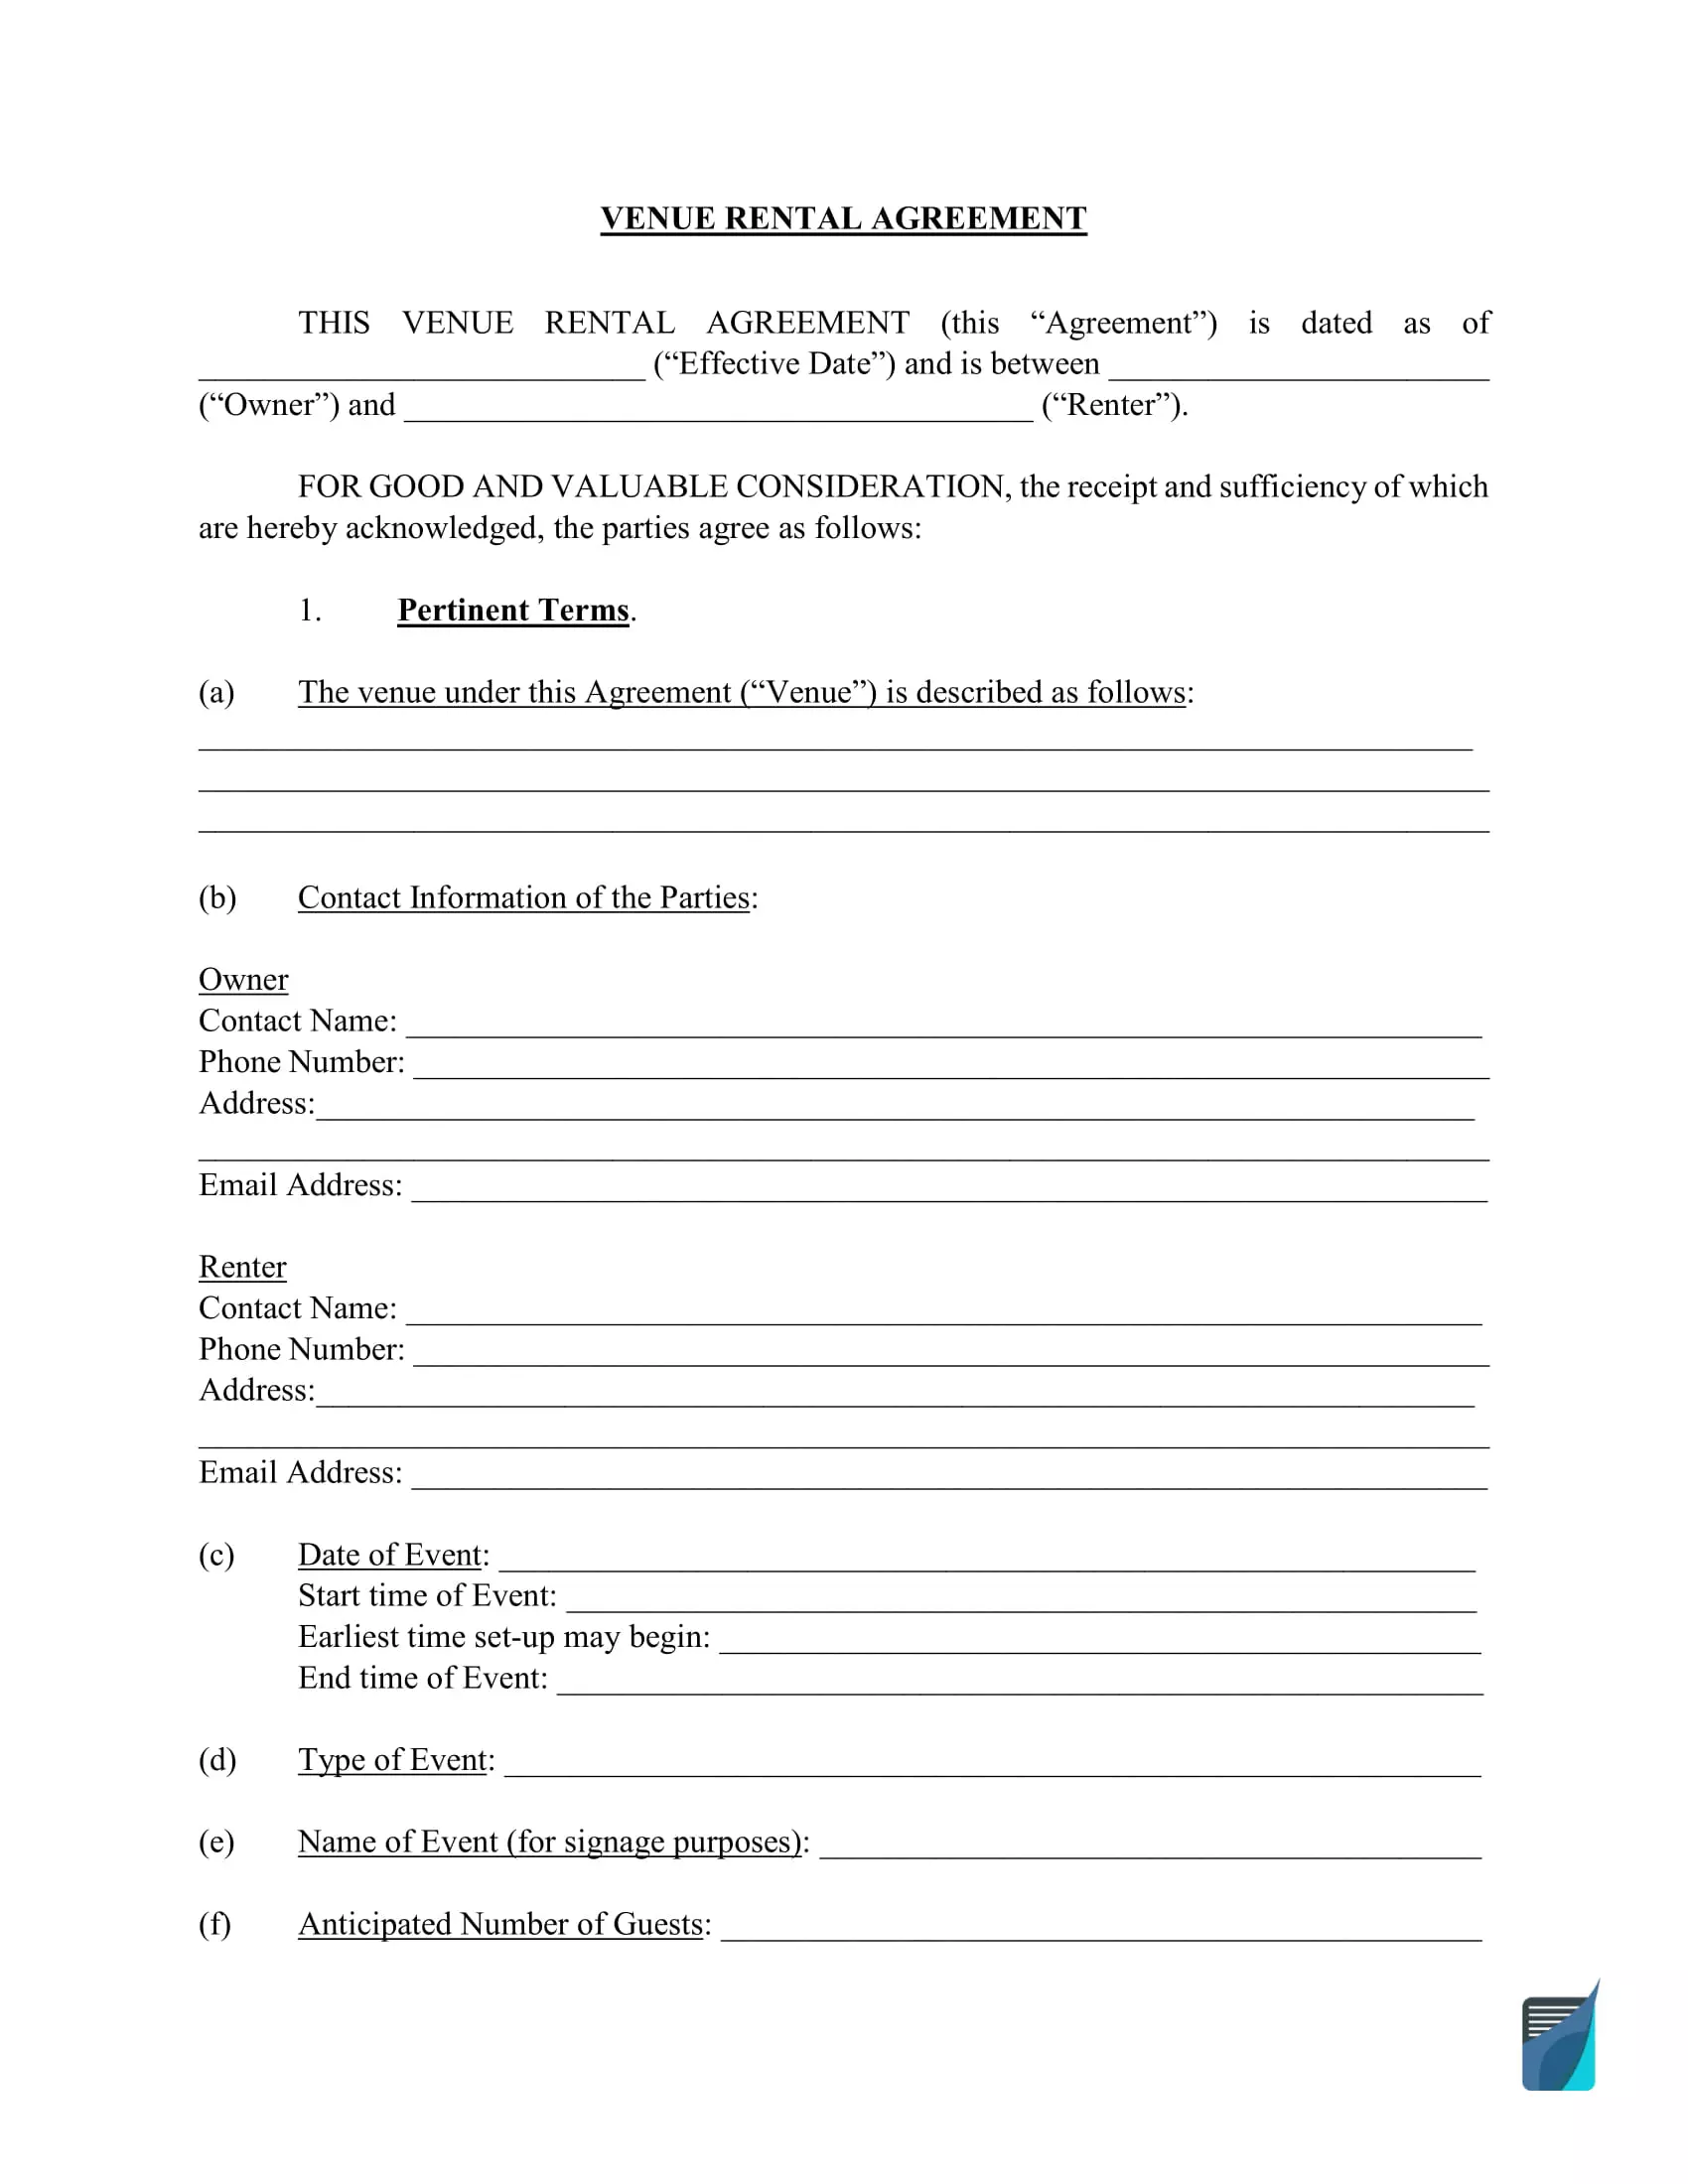 Venue Rental Agreement Form